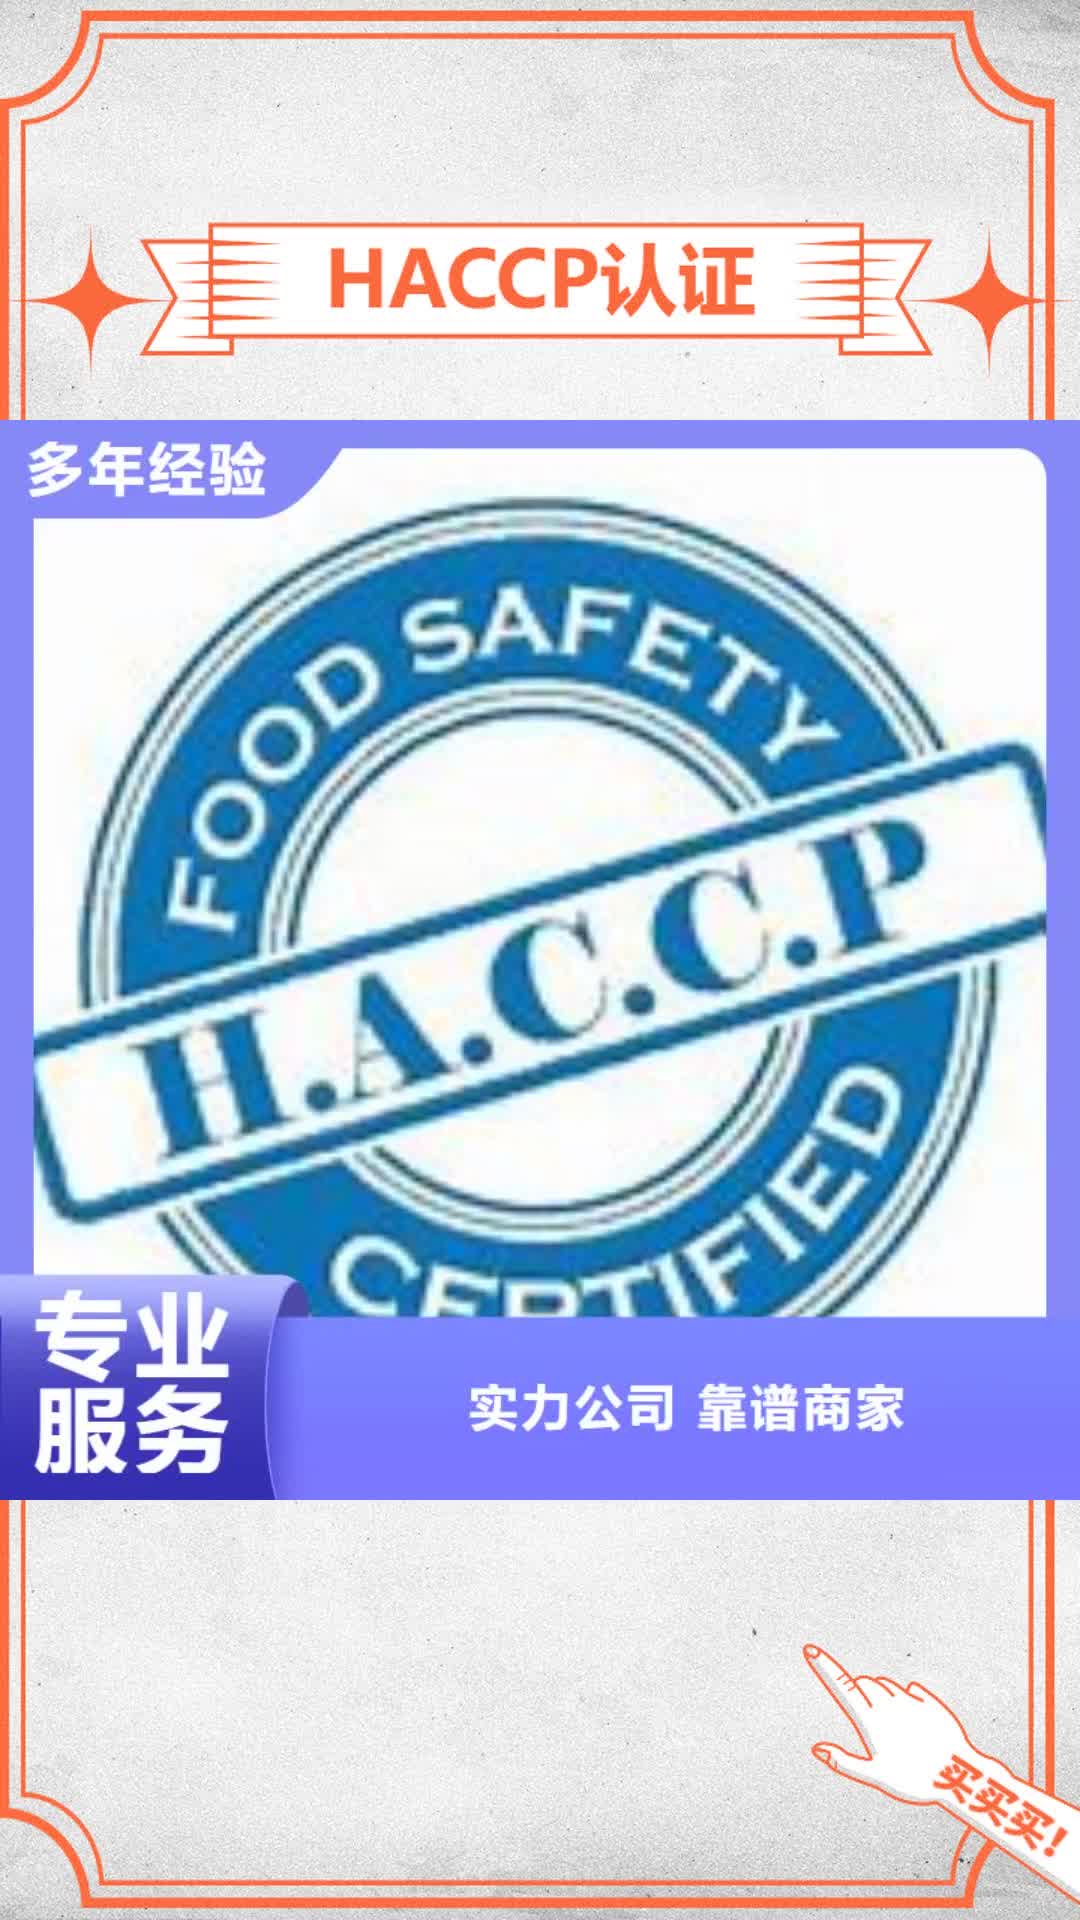 【香港 HACCP认证,ISO9001\ISO9000\ISO14001认证一站搞定】